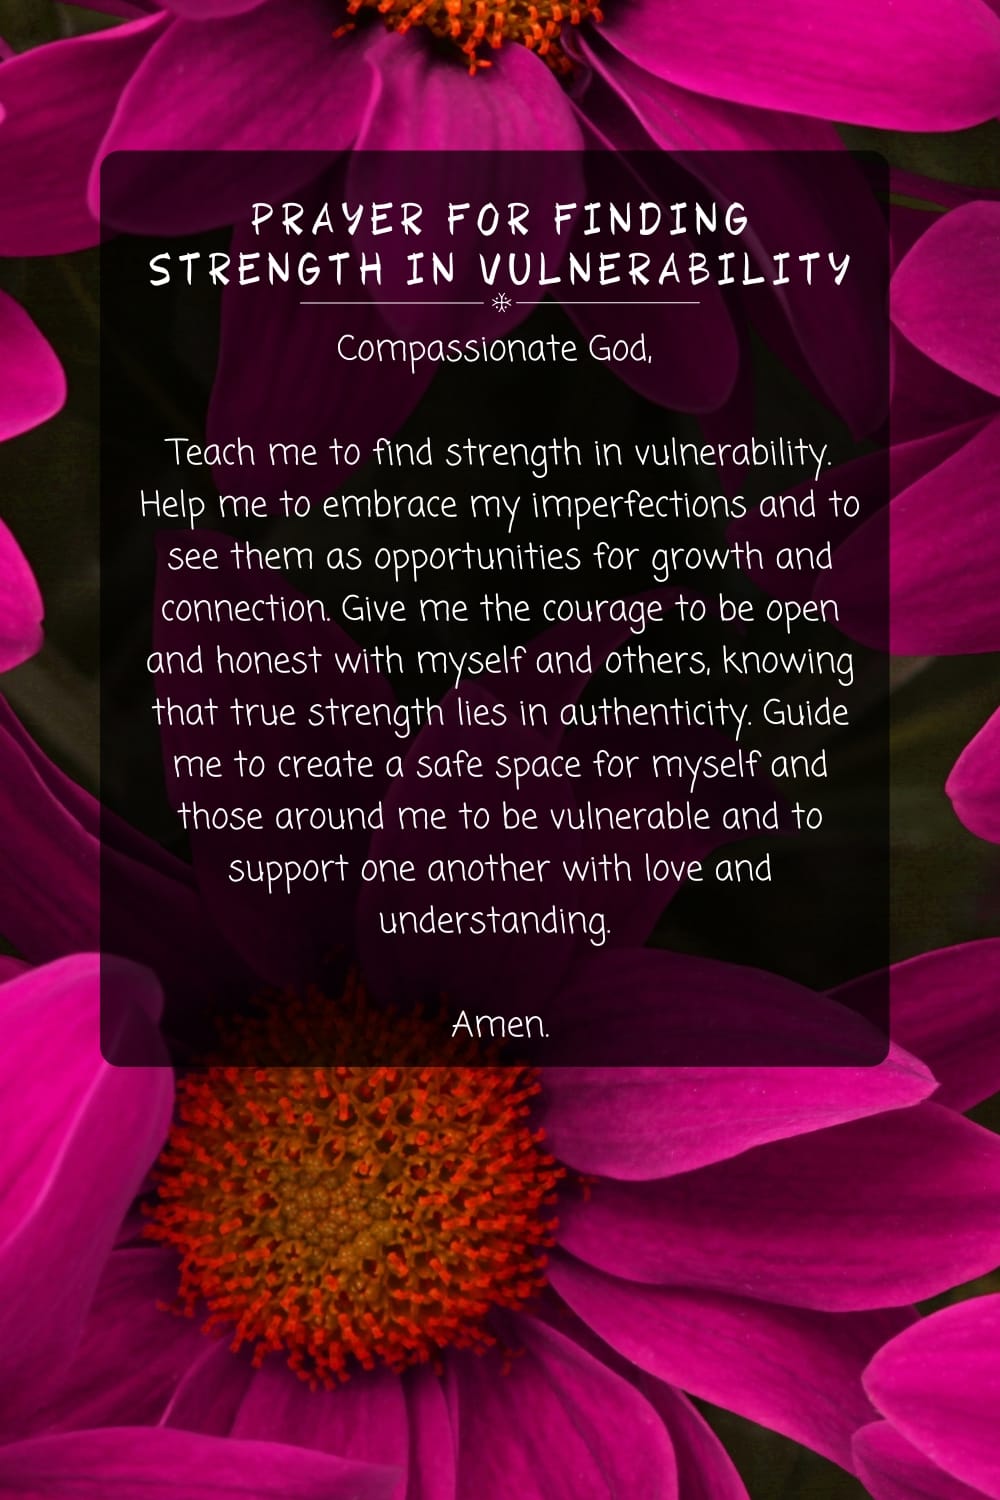 Prayer for Finding Strength in Vulnerability